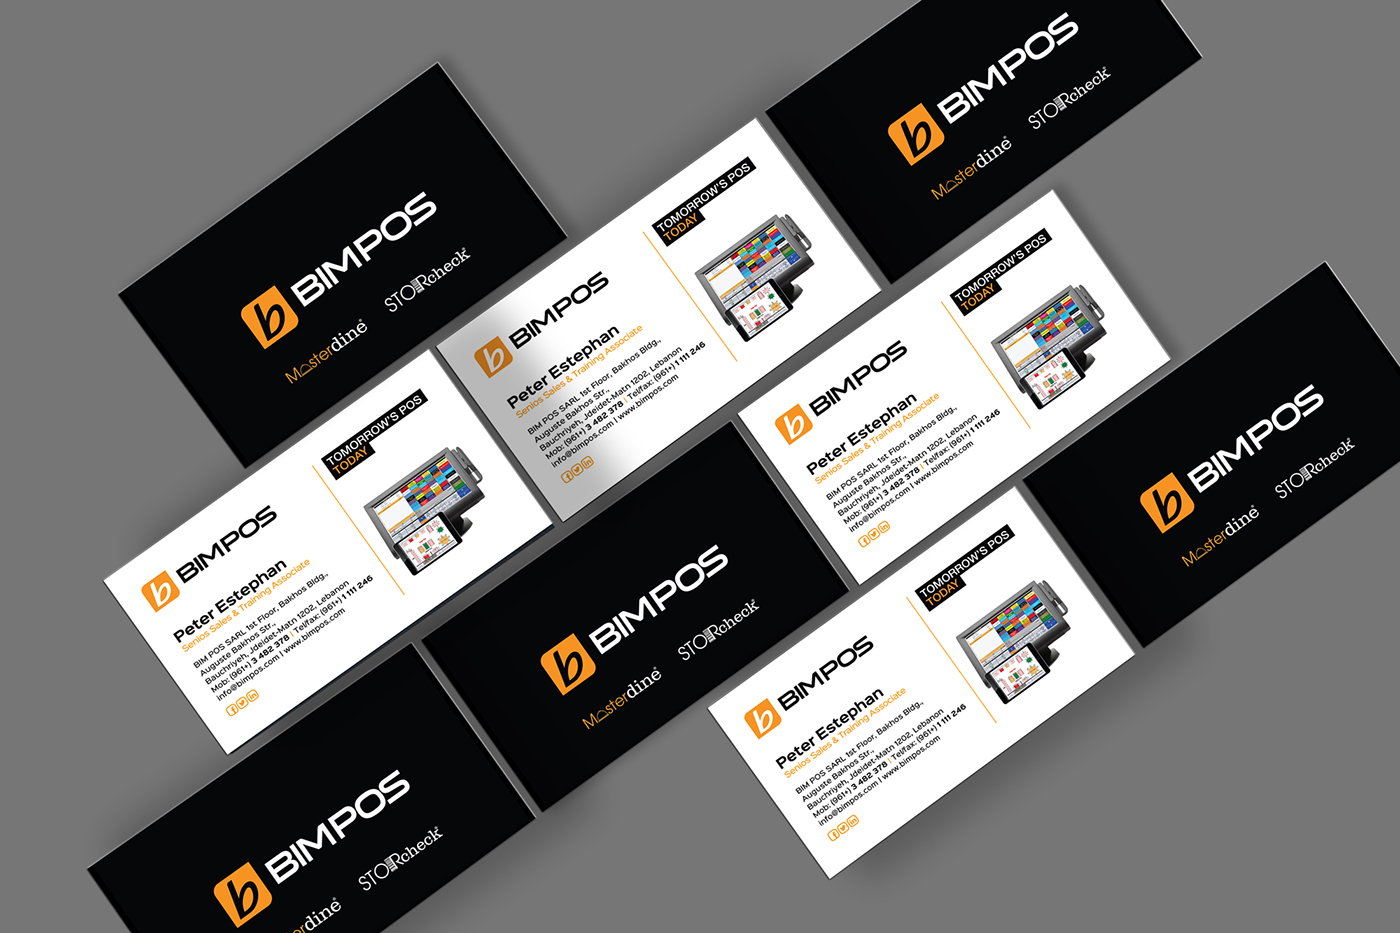 BIMPOS pos machines development design brand lebanon orange black new